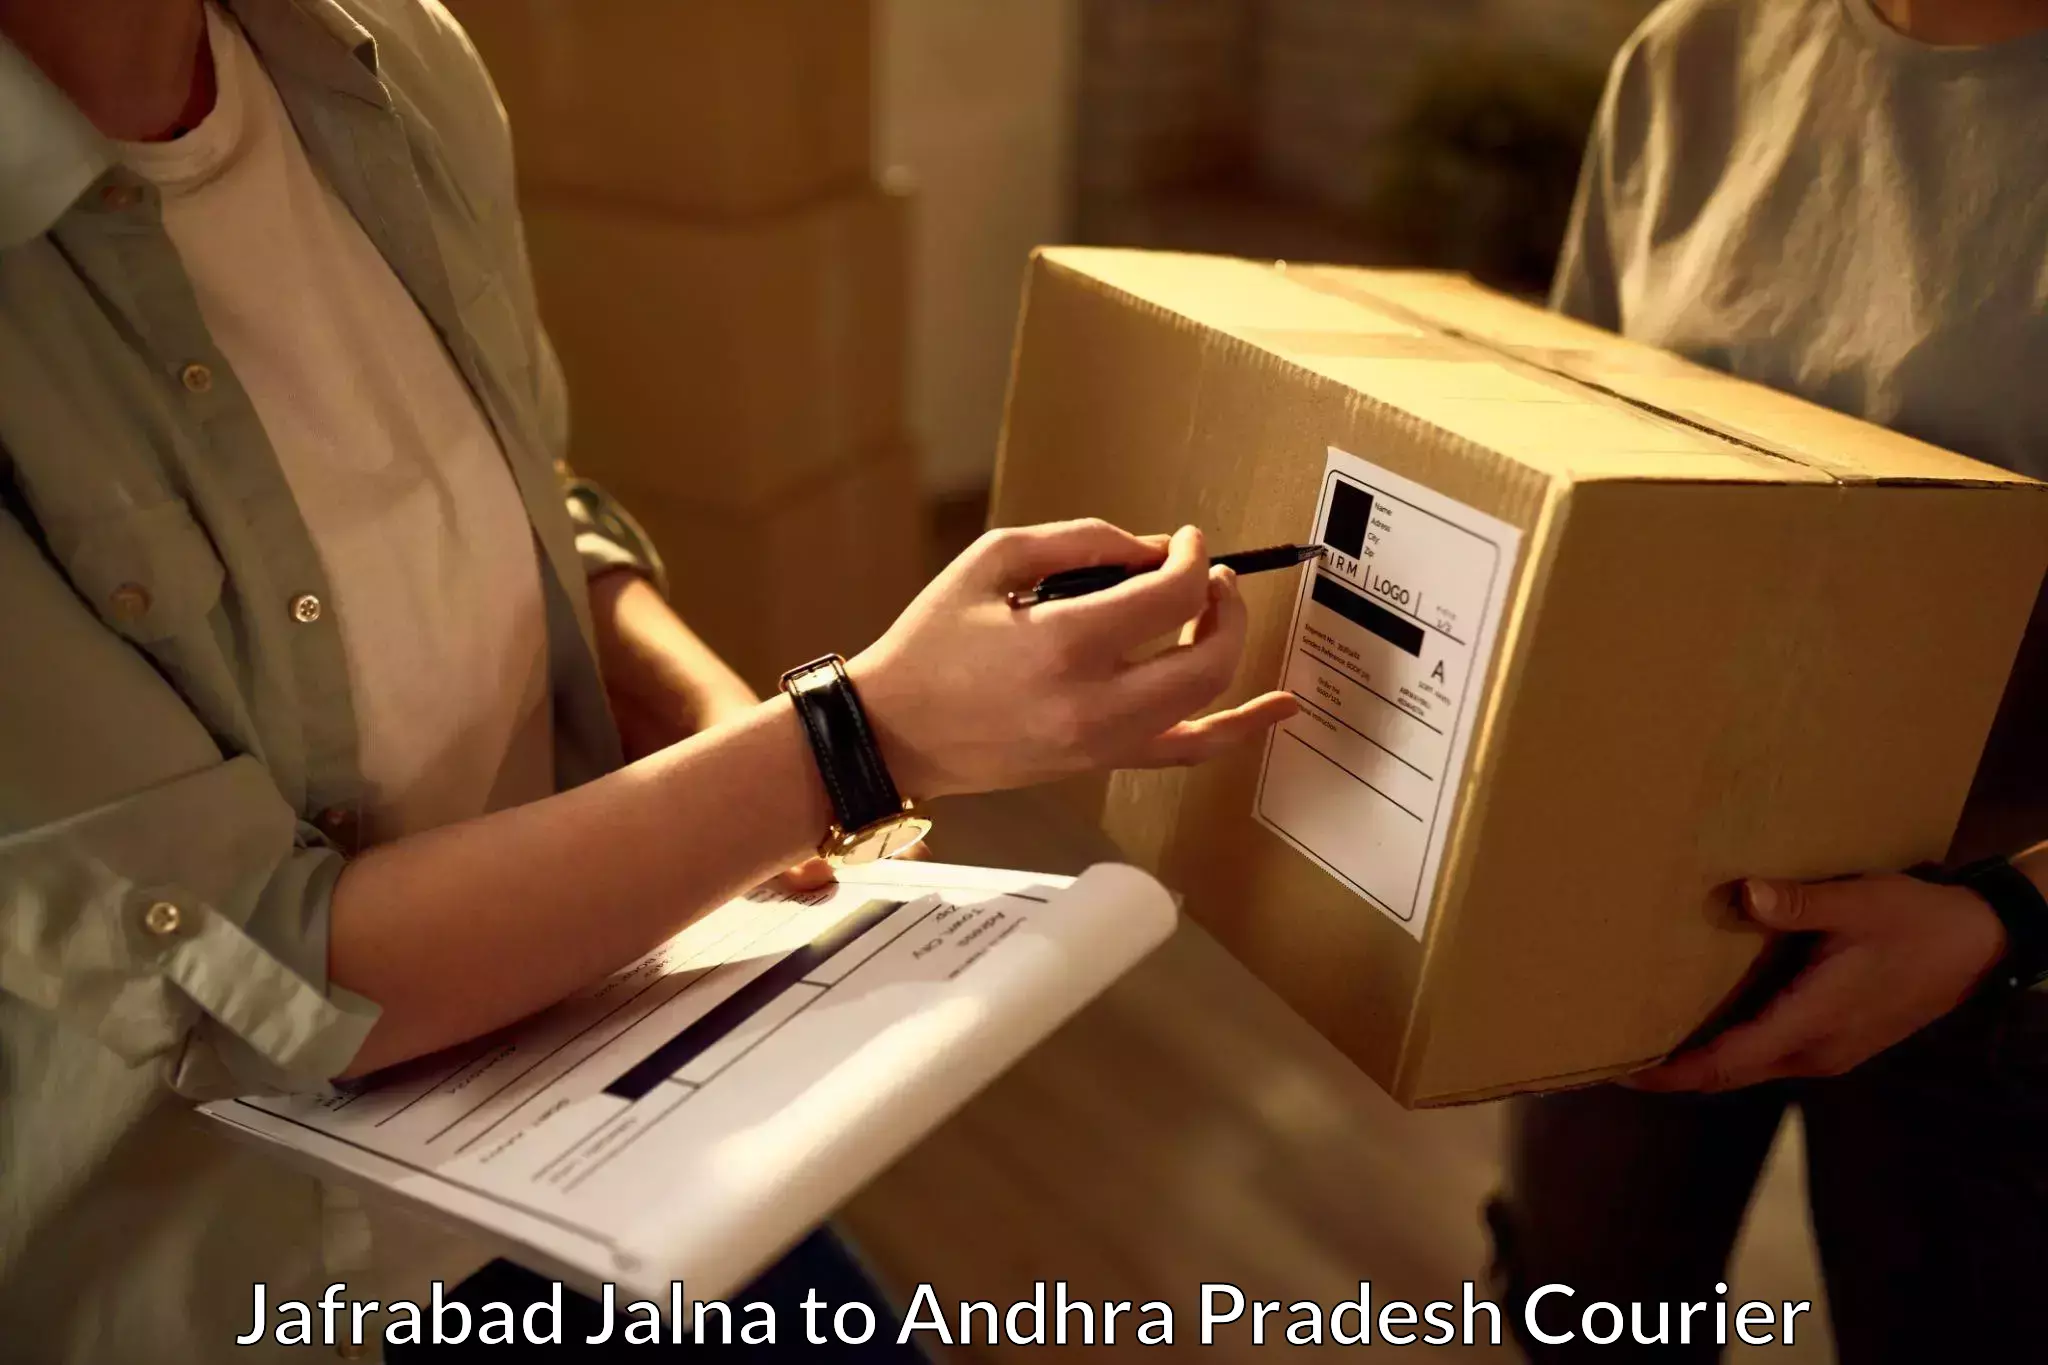 User-friendly delivery service Jafrabad Jalna to Andhra Pradesh